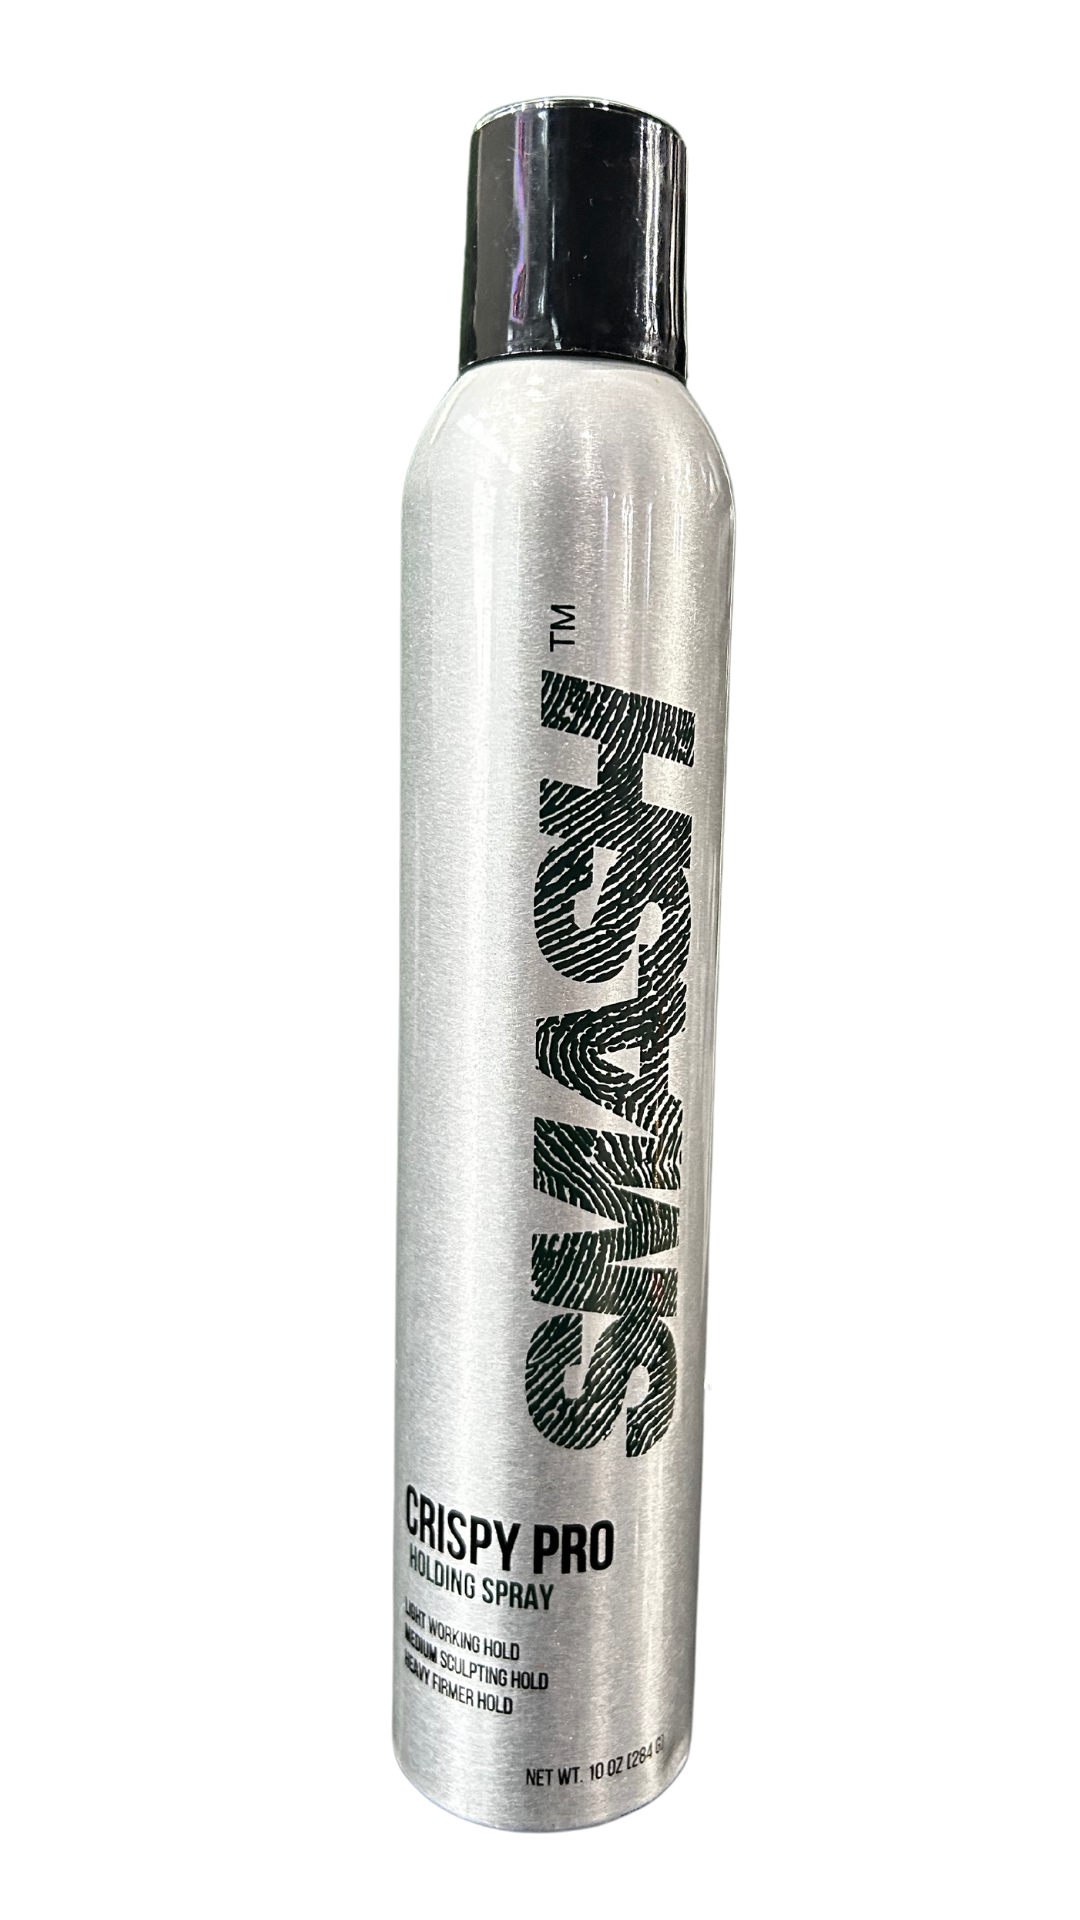 Smash Crispy Pro Holding spray